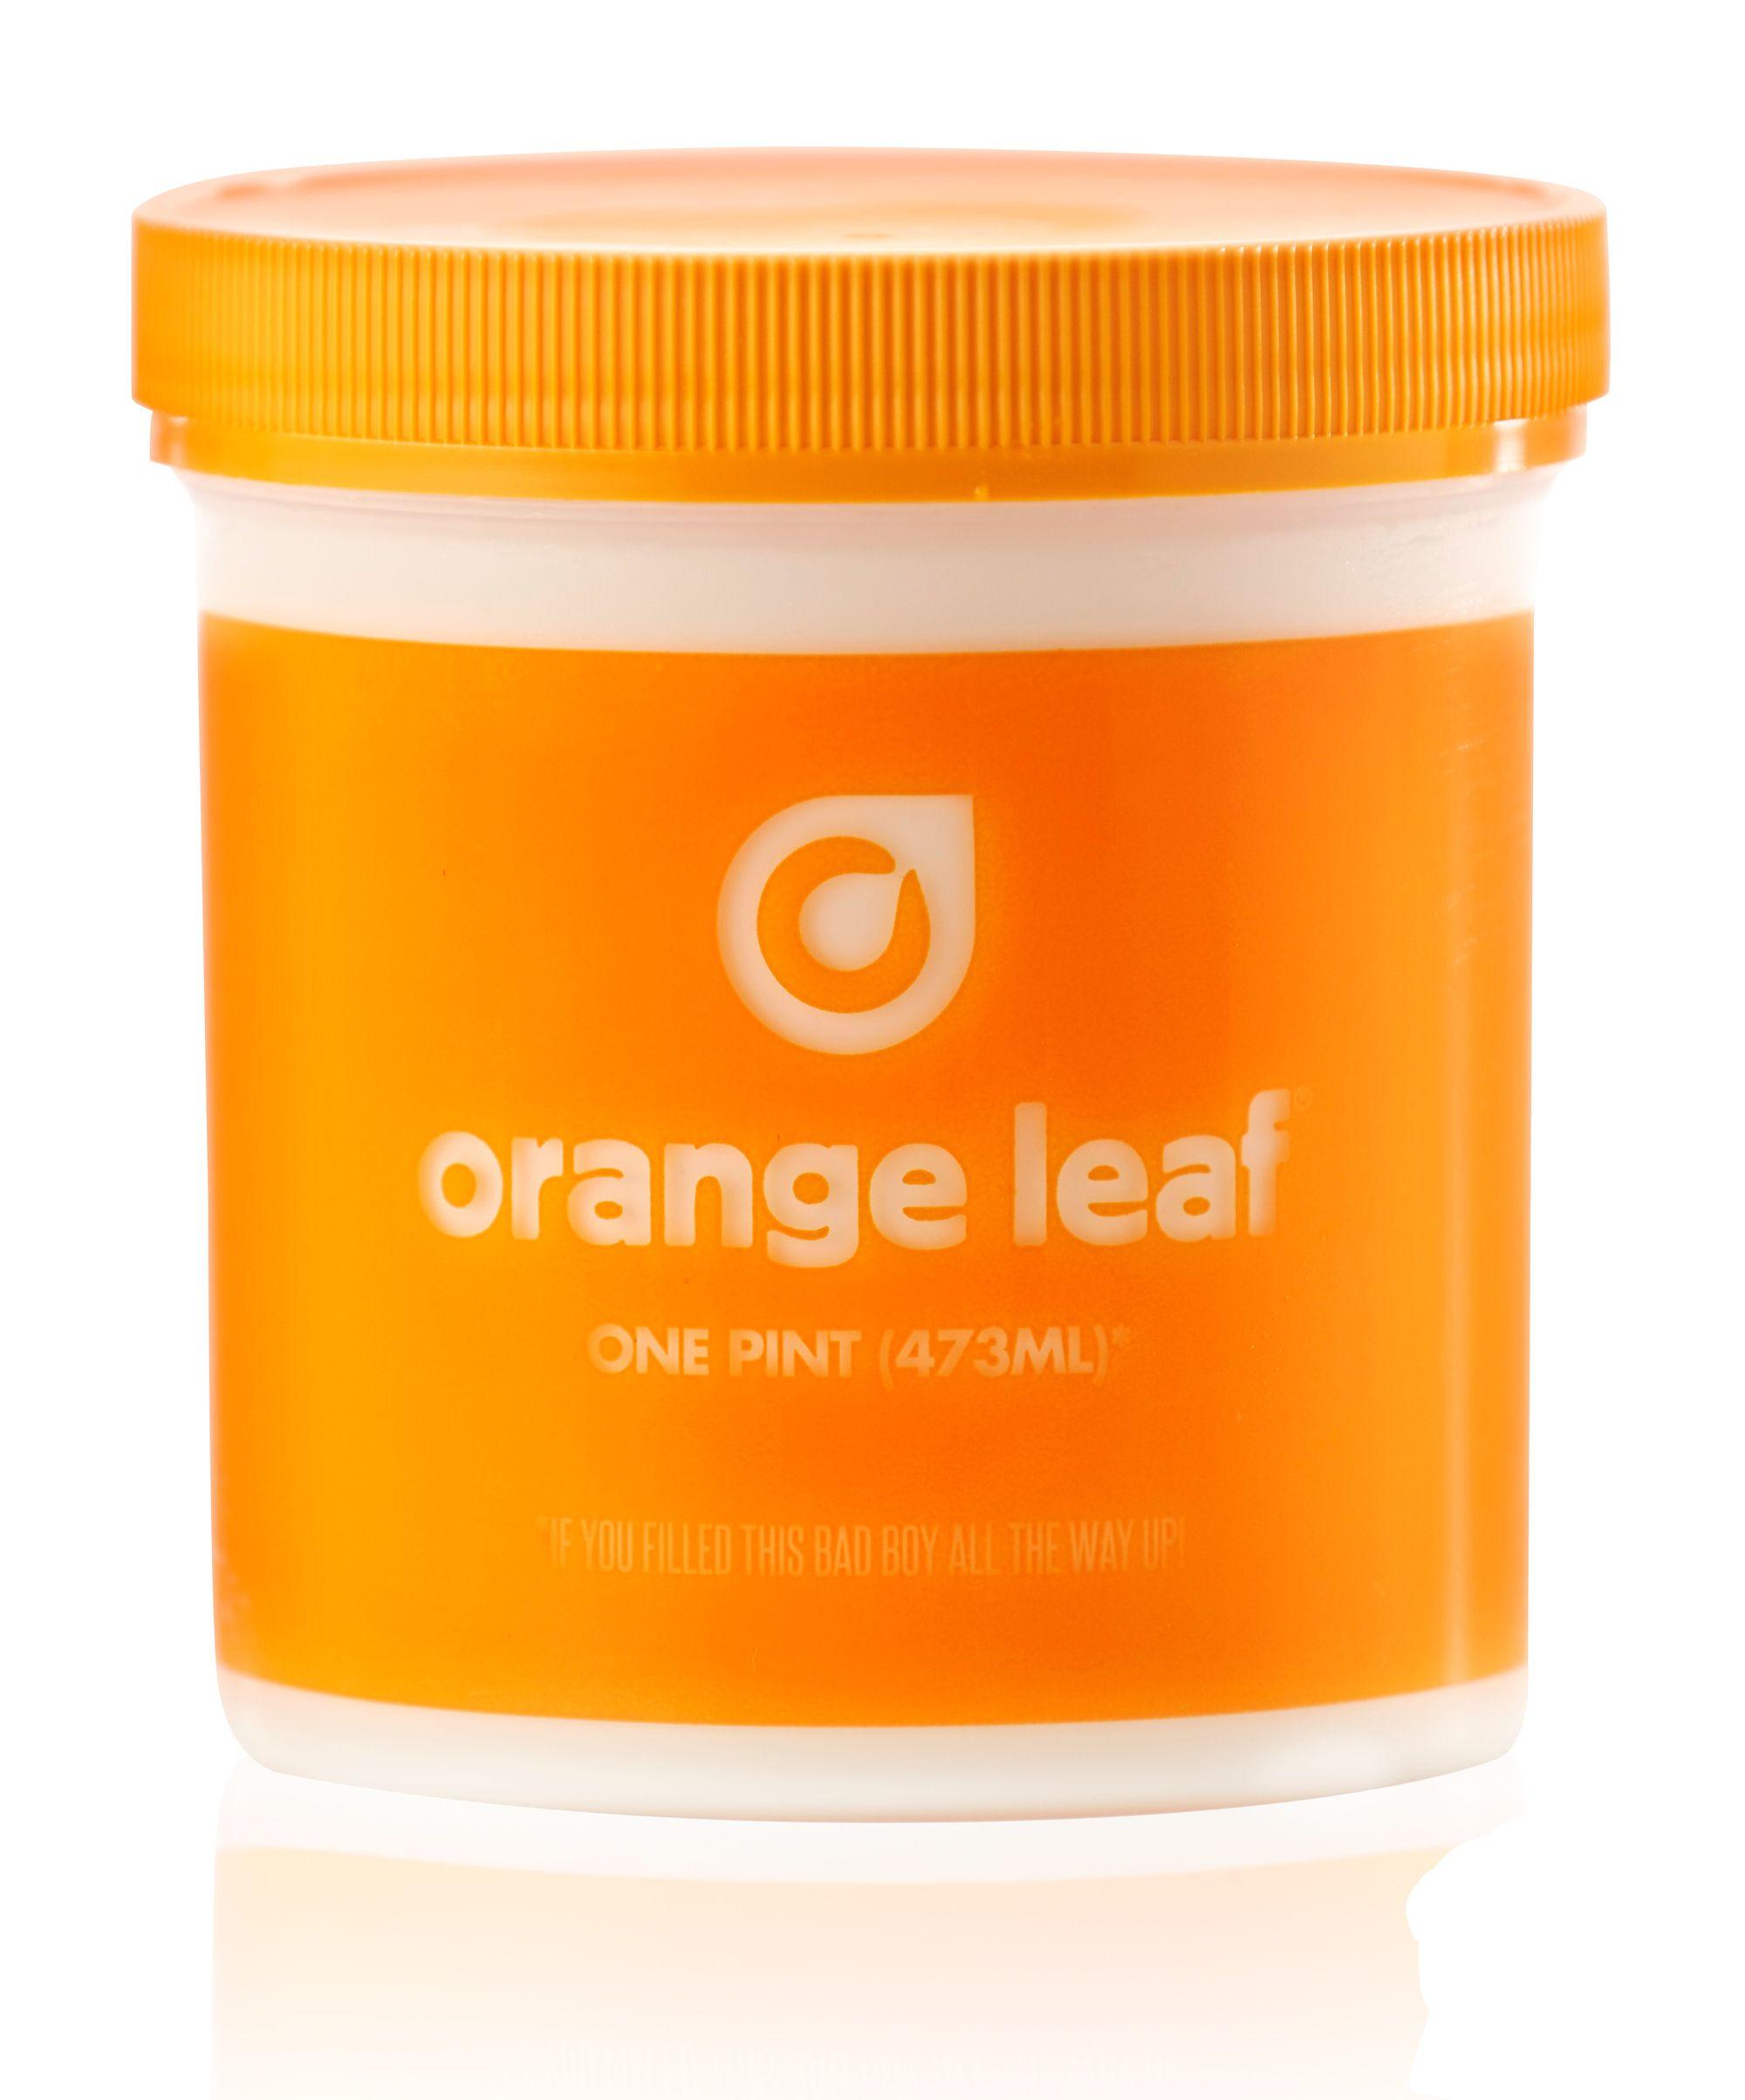 Orange Leaf Yogurt Logo - Orange Leaf Frozen Yogurt Launches Orange Leaf to Go | Business Wire